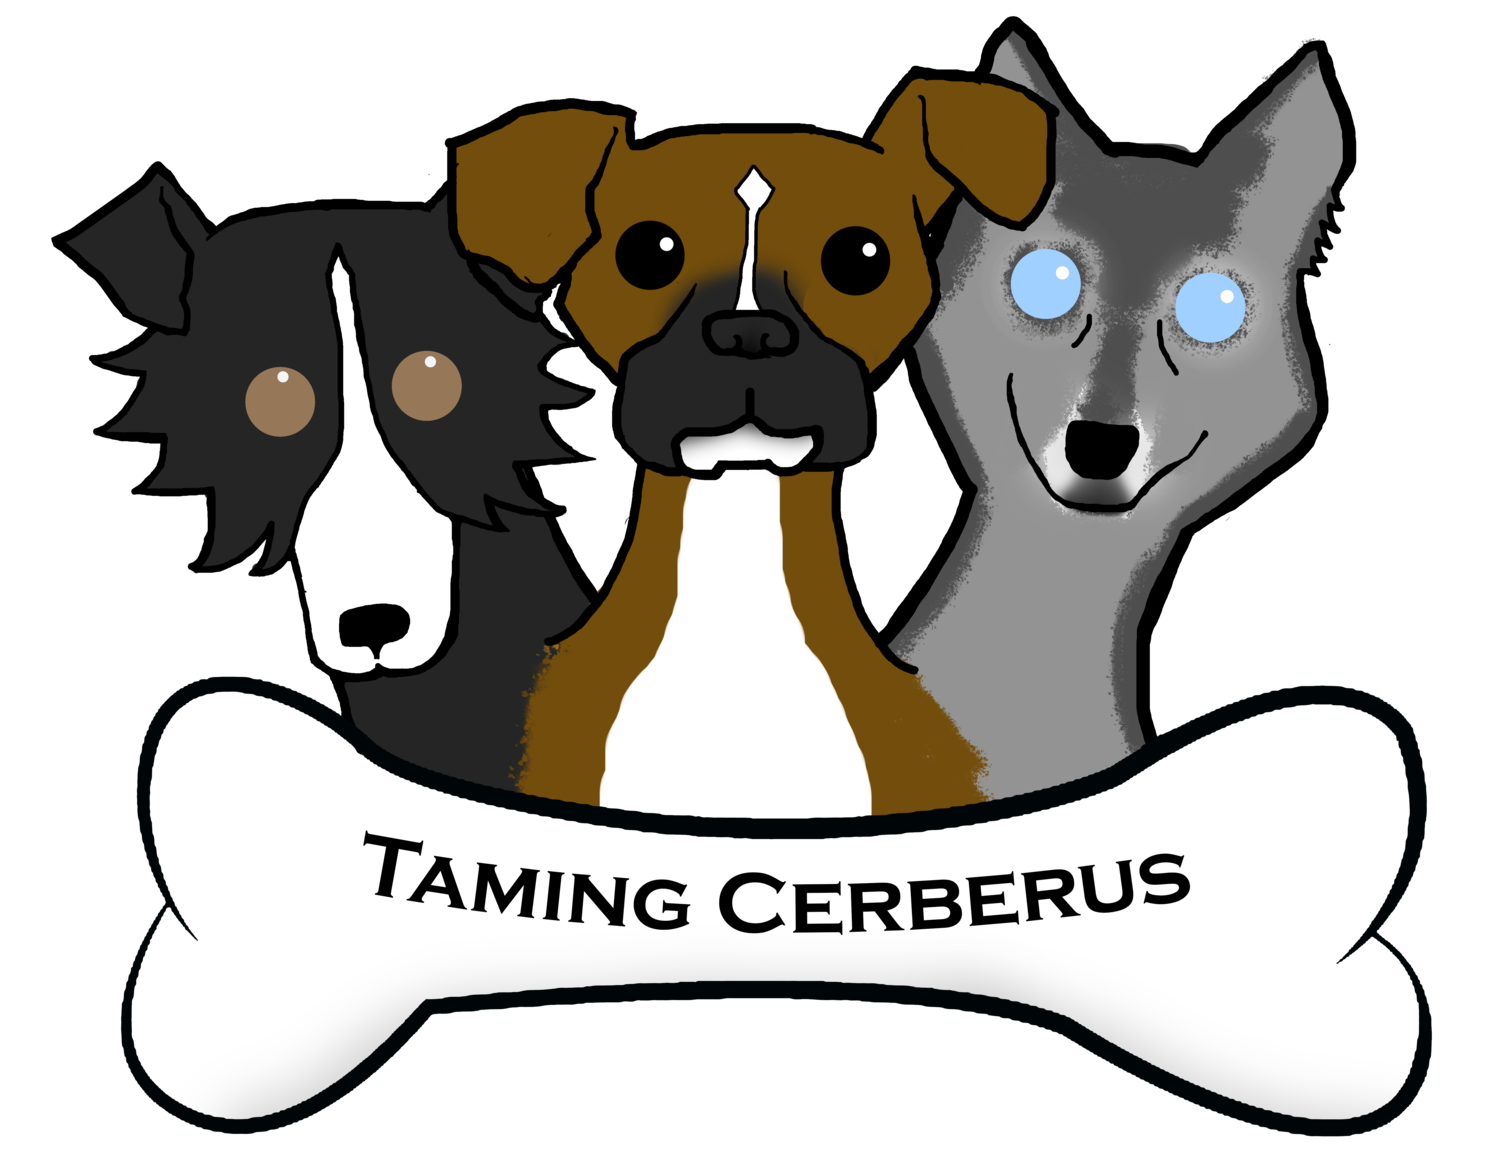 Taming Cerberus